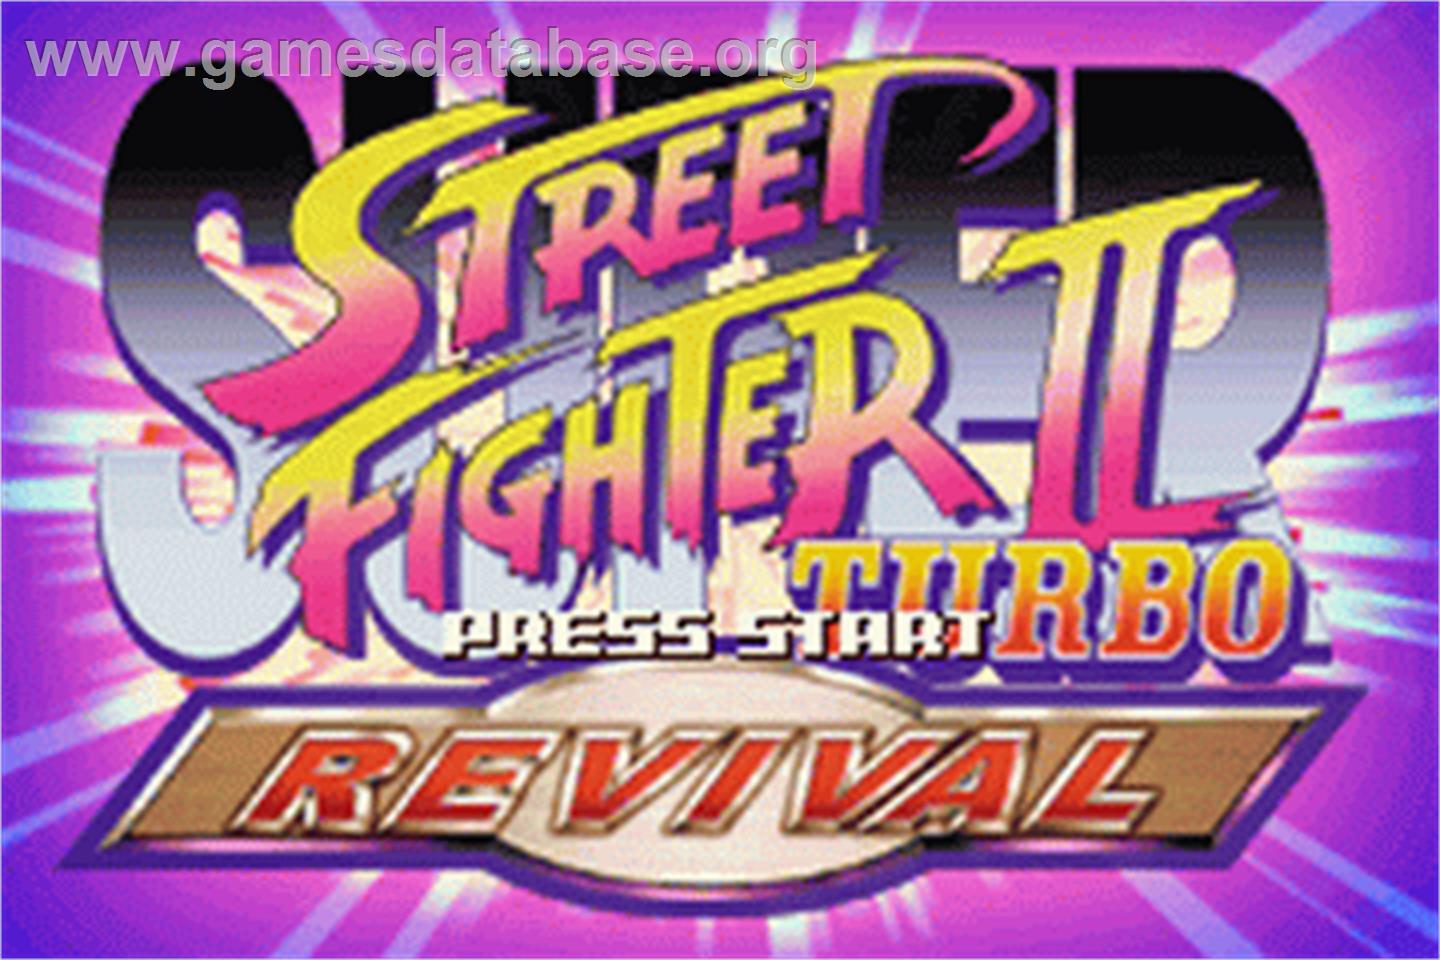 Super Street Fighter II: Turbo Revival - Nintendo Game Boy Advance - Artwork - Title Screen